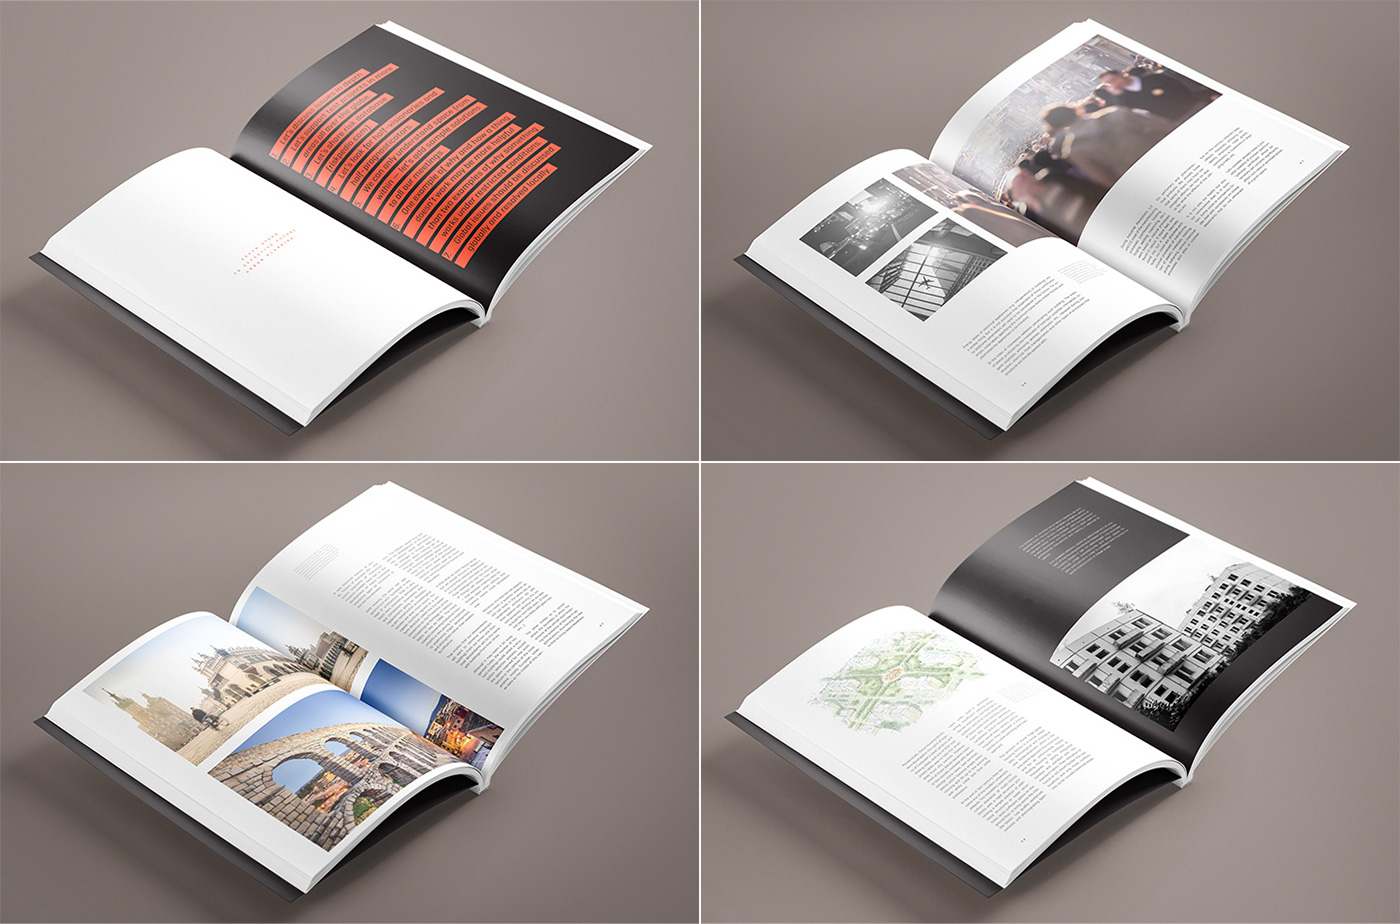 book editorial urbanism   architecture print photos Layout city future Smart